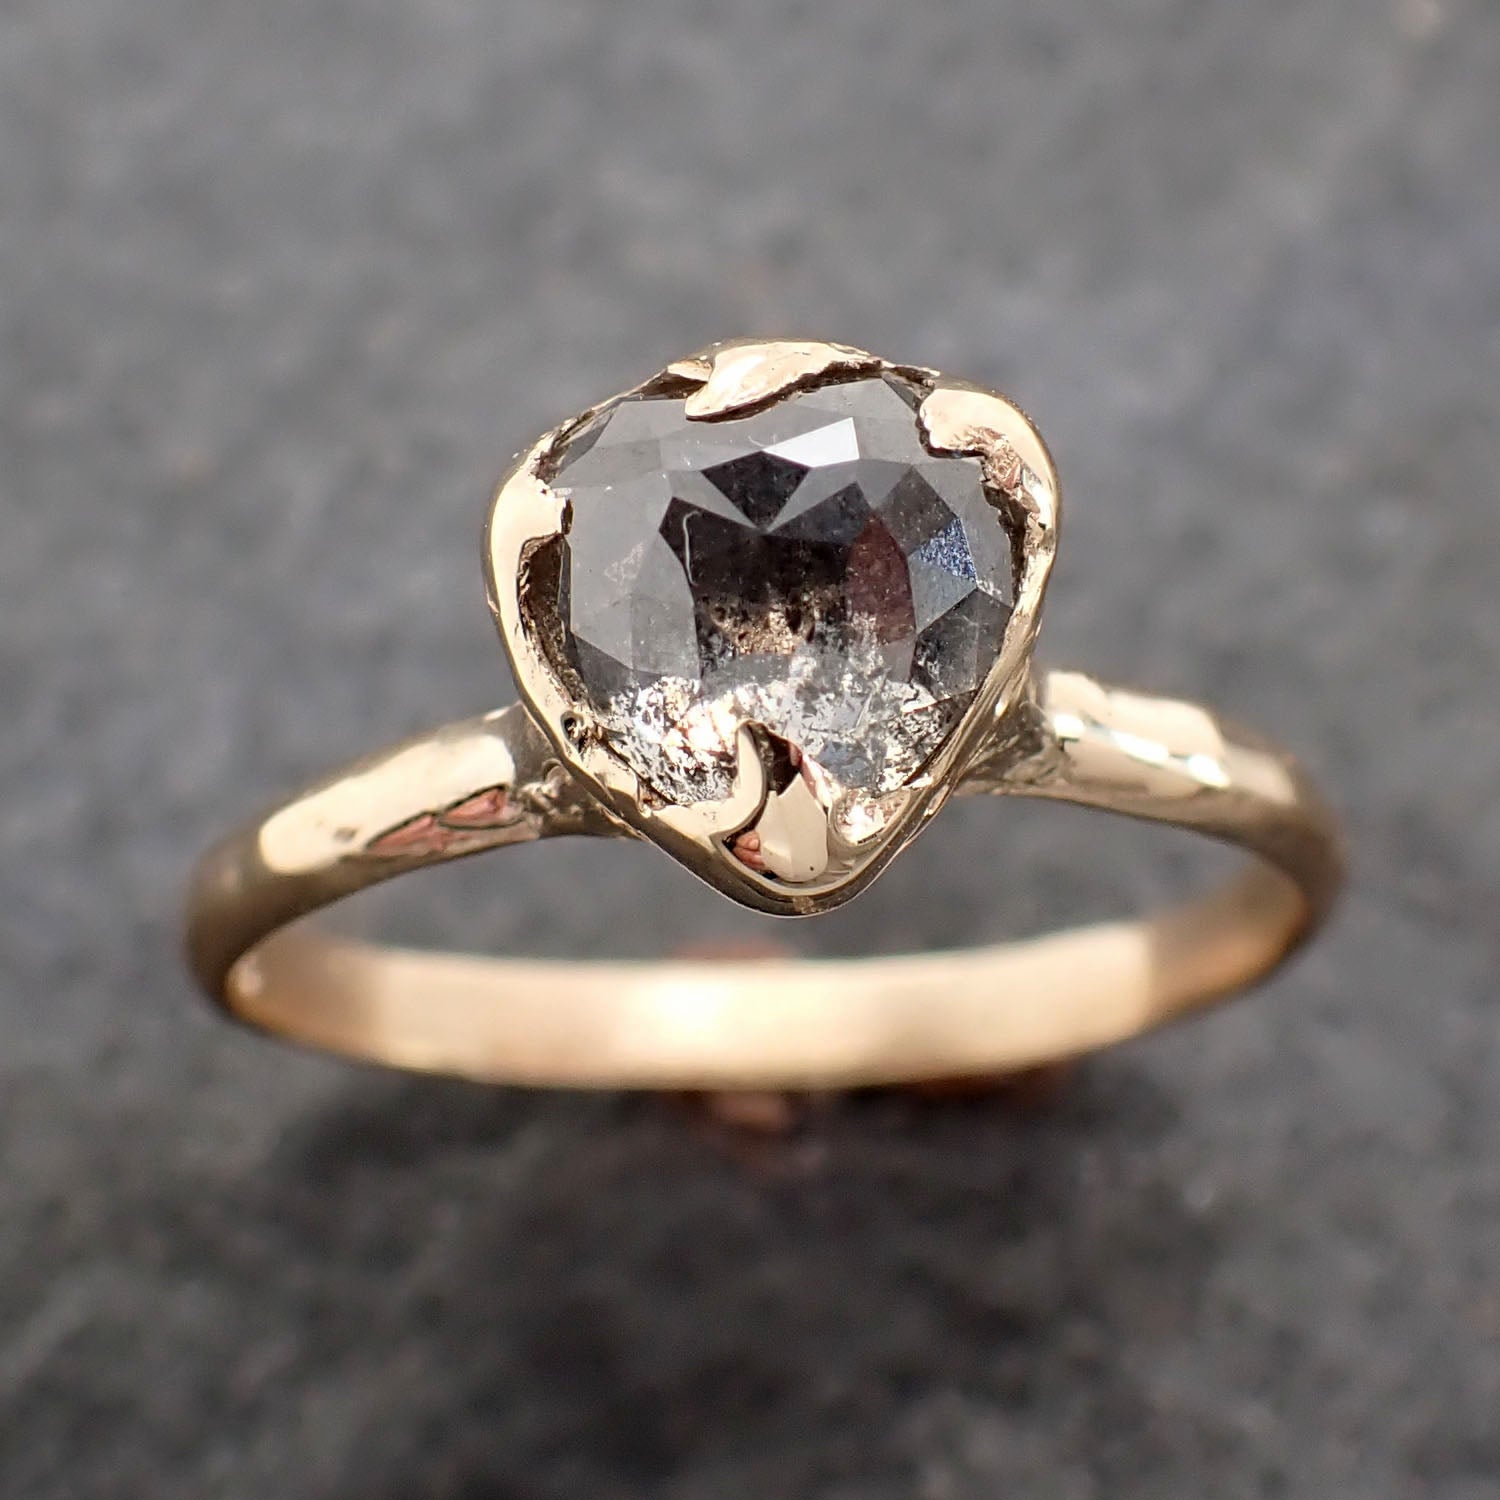 Fancy cut salt and pepper Diamond Solitaire Engagement 14k yellow Gold Wedding Ring Diamond Ring byAngeline 2609